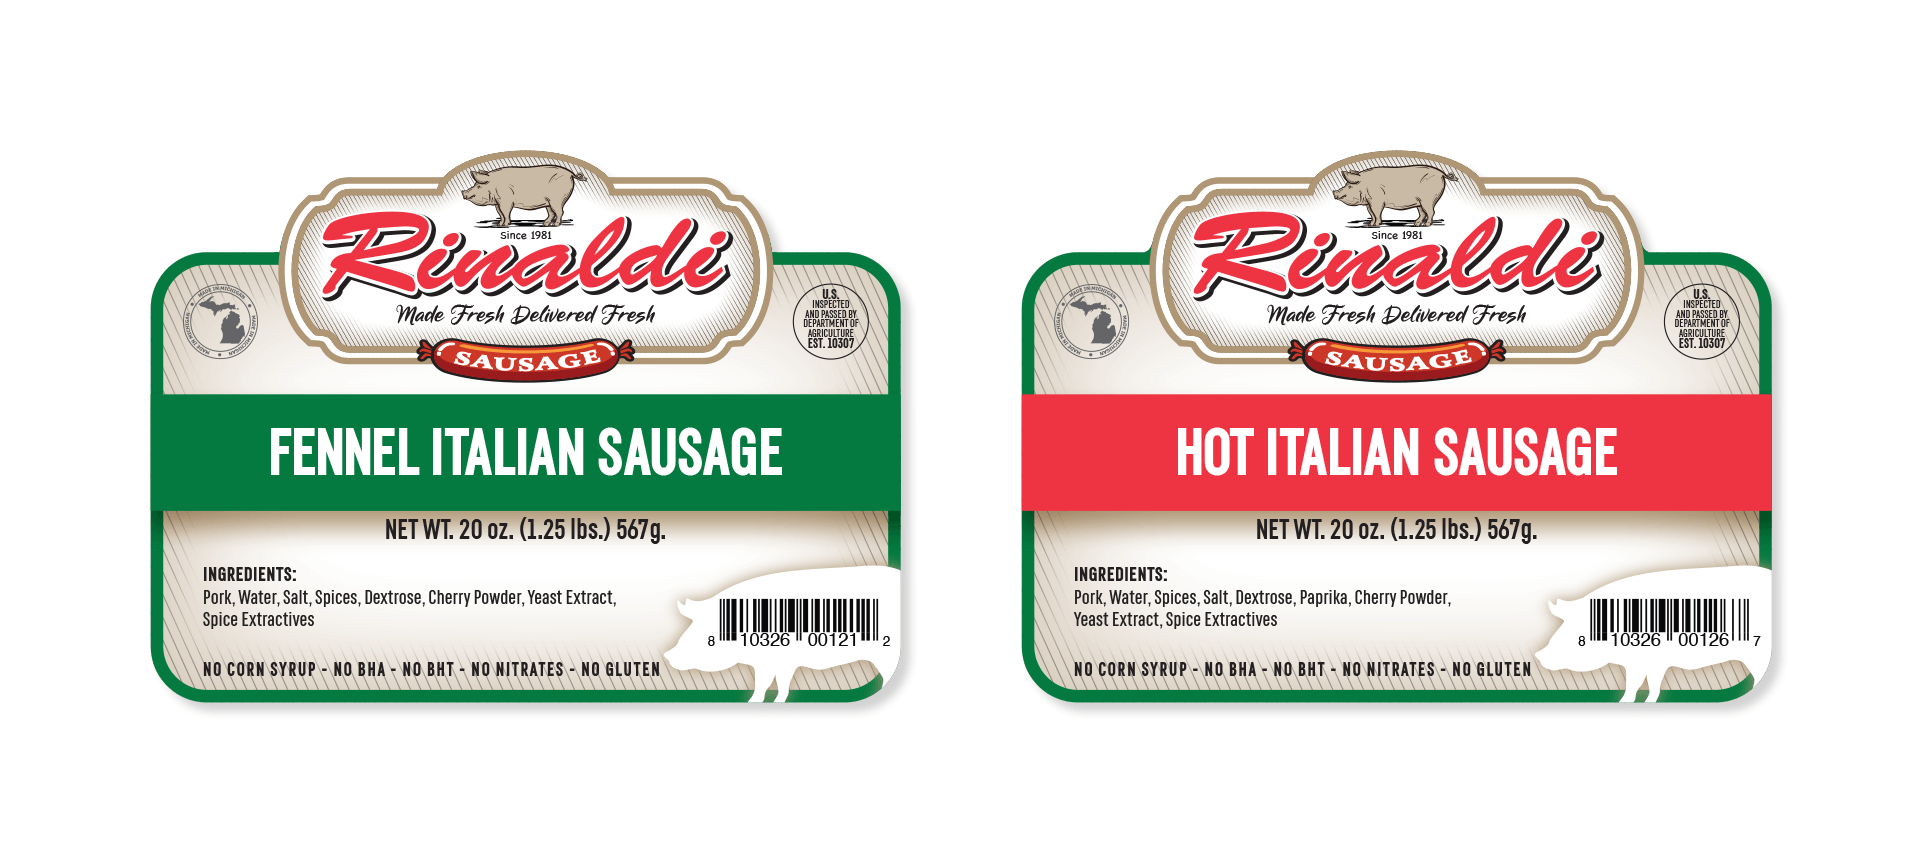 Rinaldi label Fennel Italian Sausage and Hot Italian Sausage